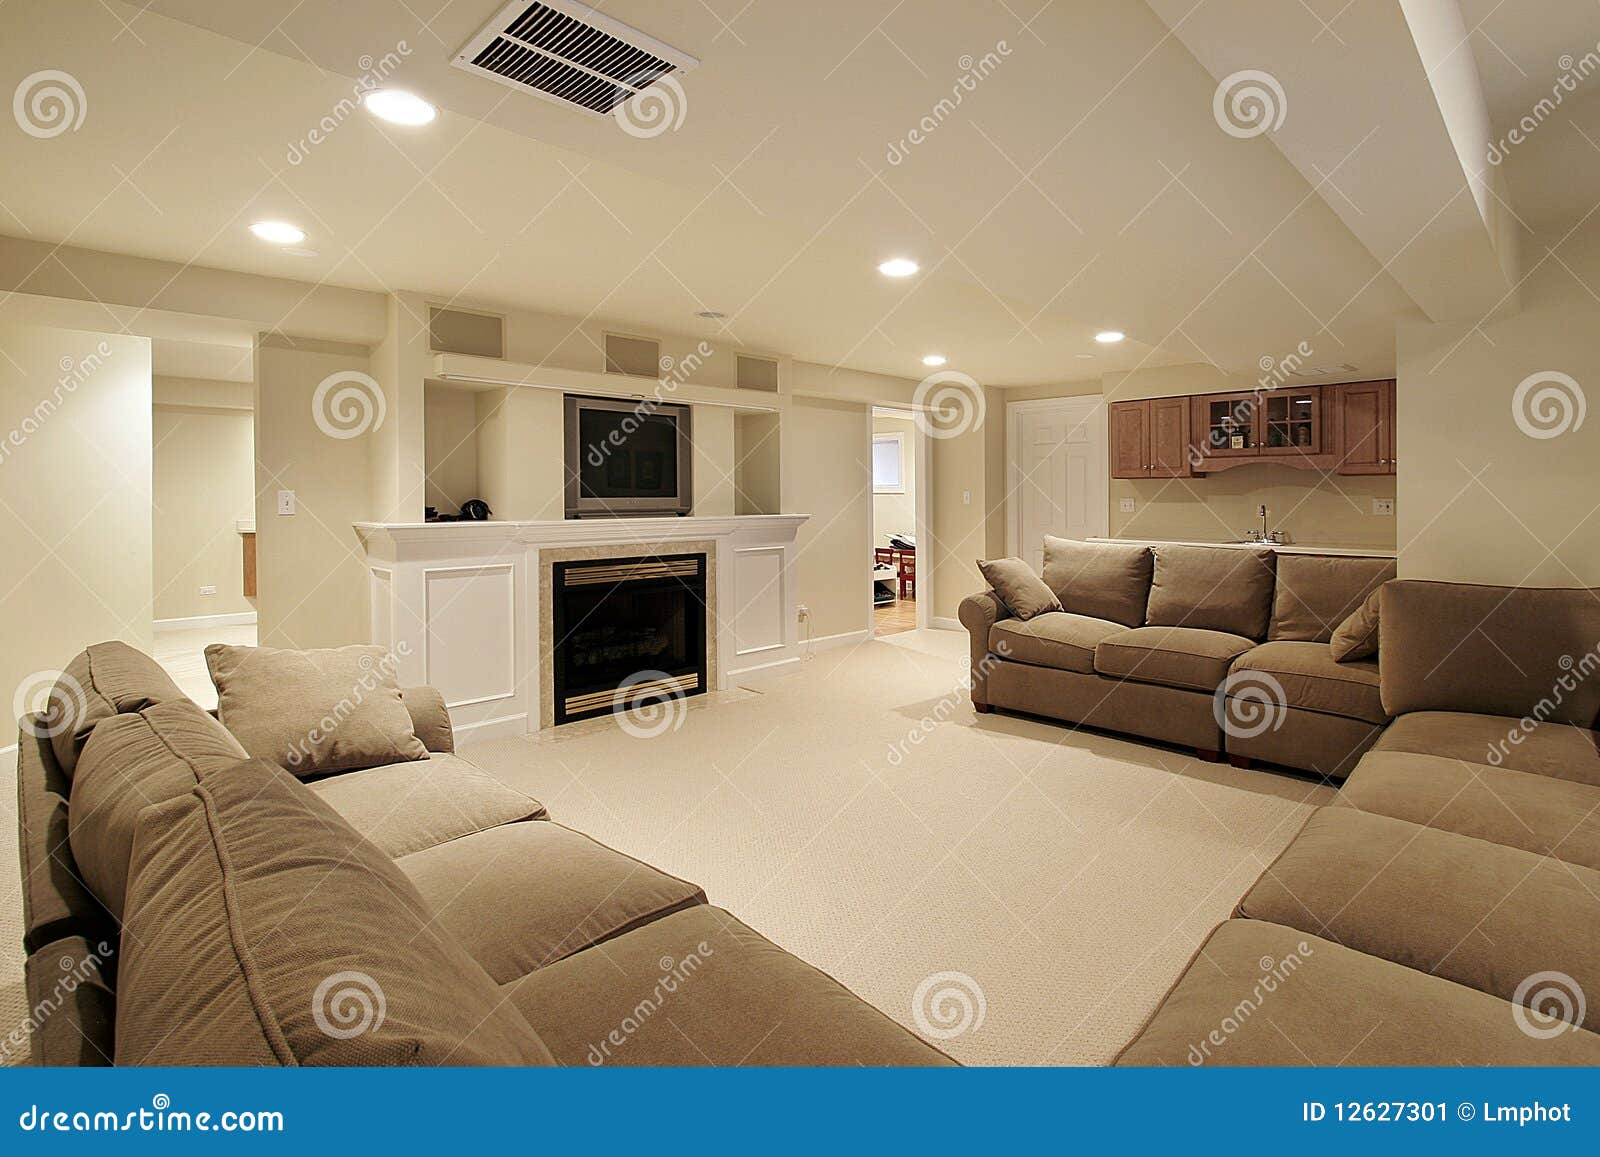 basement in luxury home